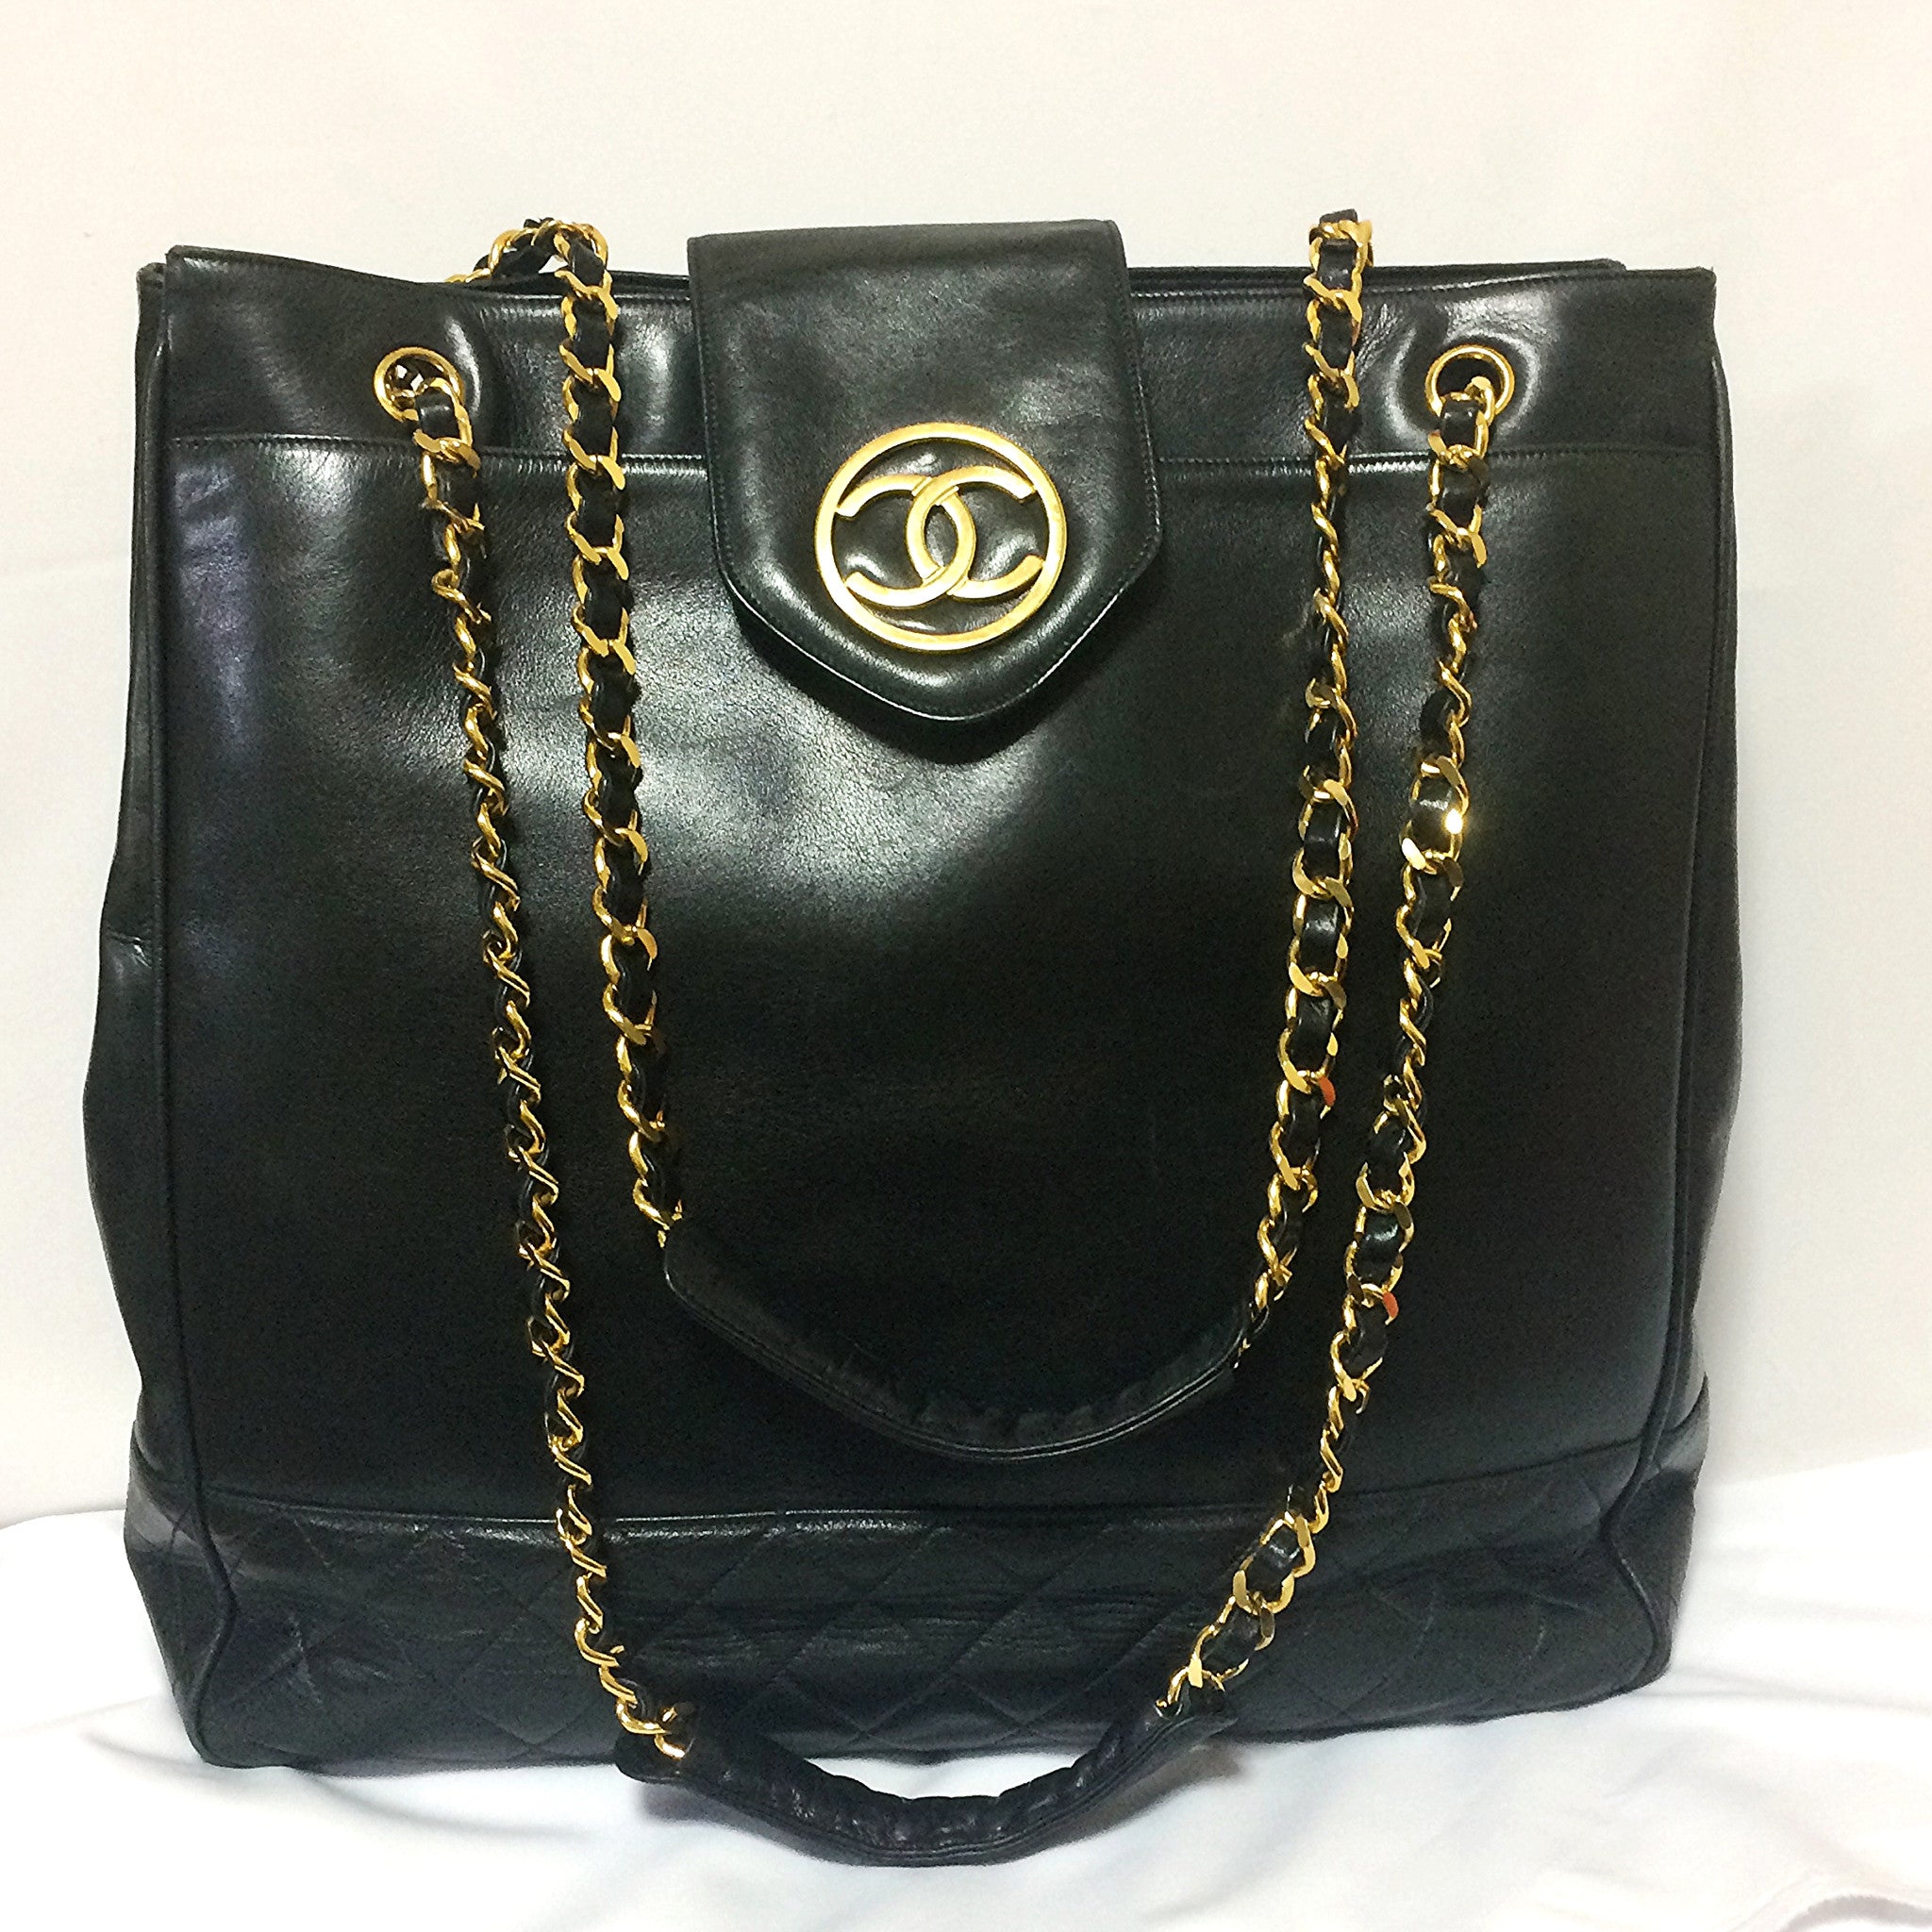 Vintage CHANEL black camera shoulder bag with CC mark stitch and